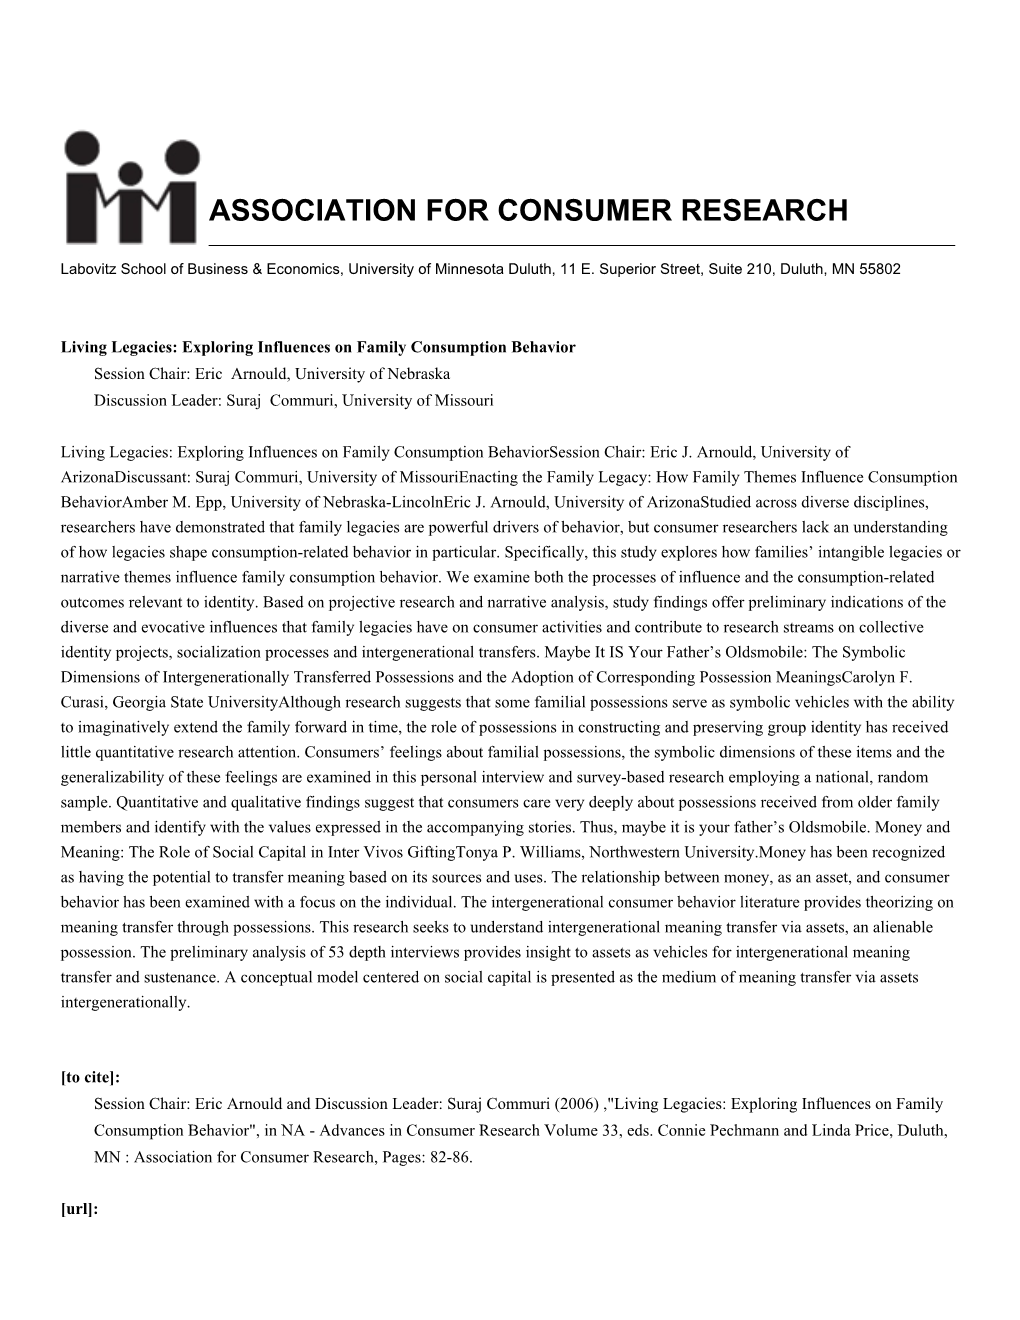 Living Legacies: Exploring Influences on Family Consumption Behavior